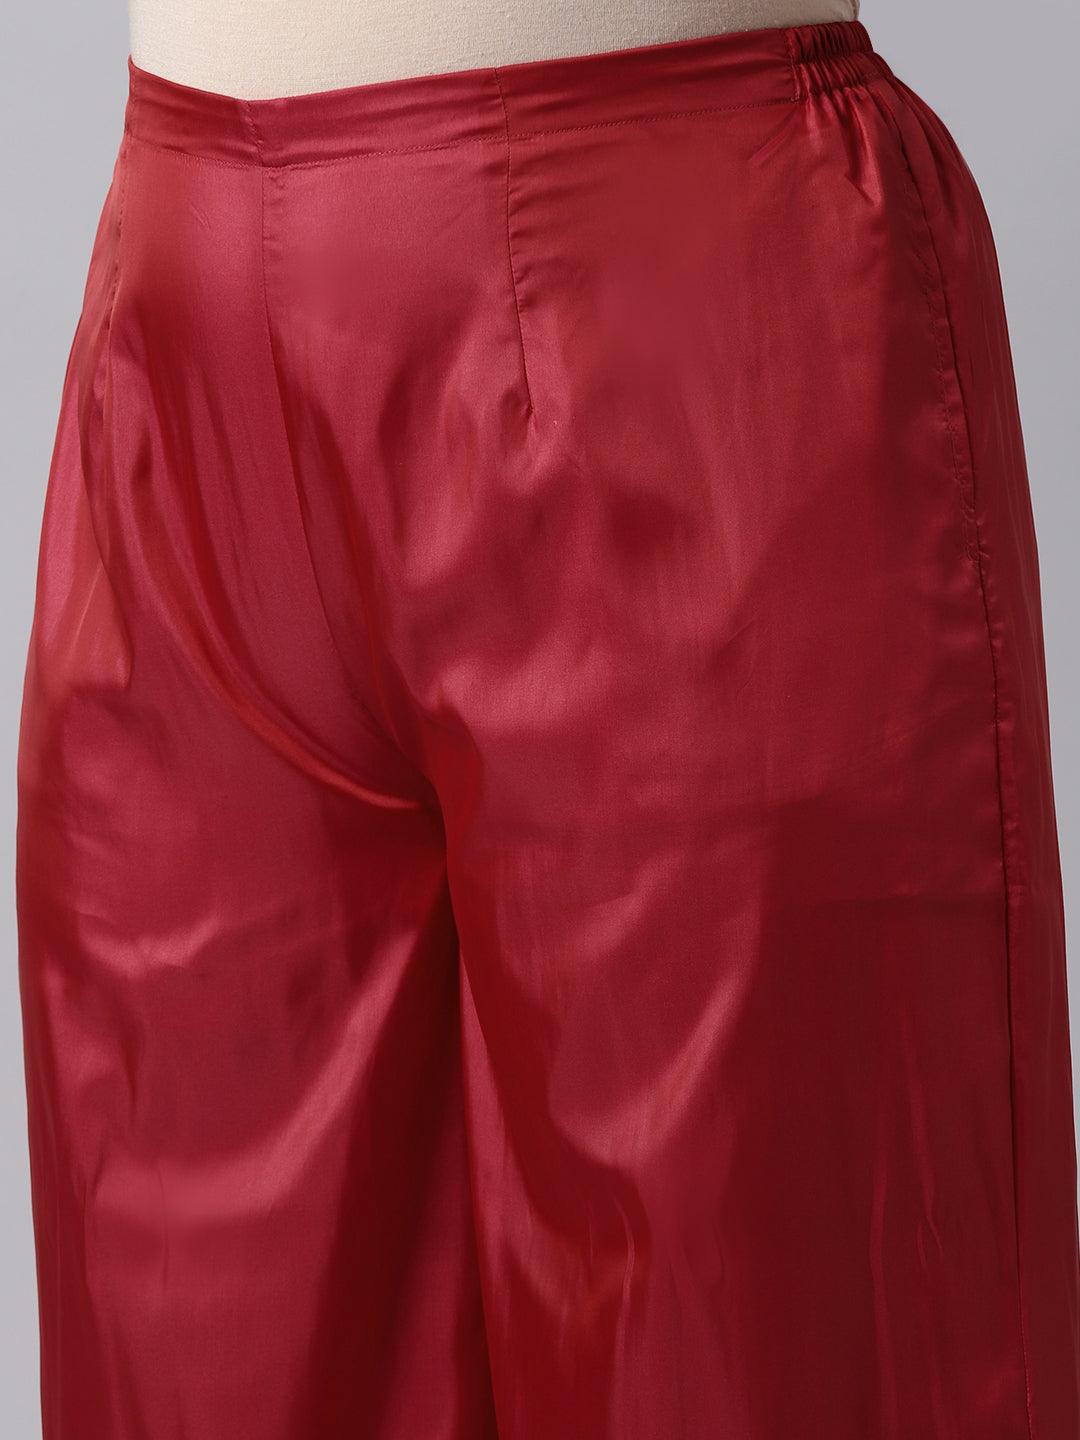 Plus Size Red Woven Design Art Silk Straight Kurta With Palazzos & Dupatta